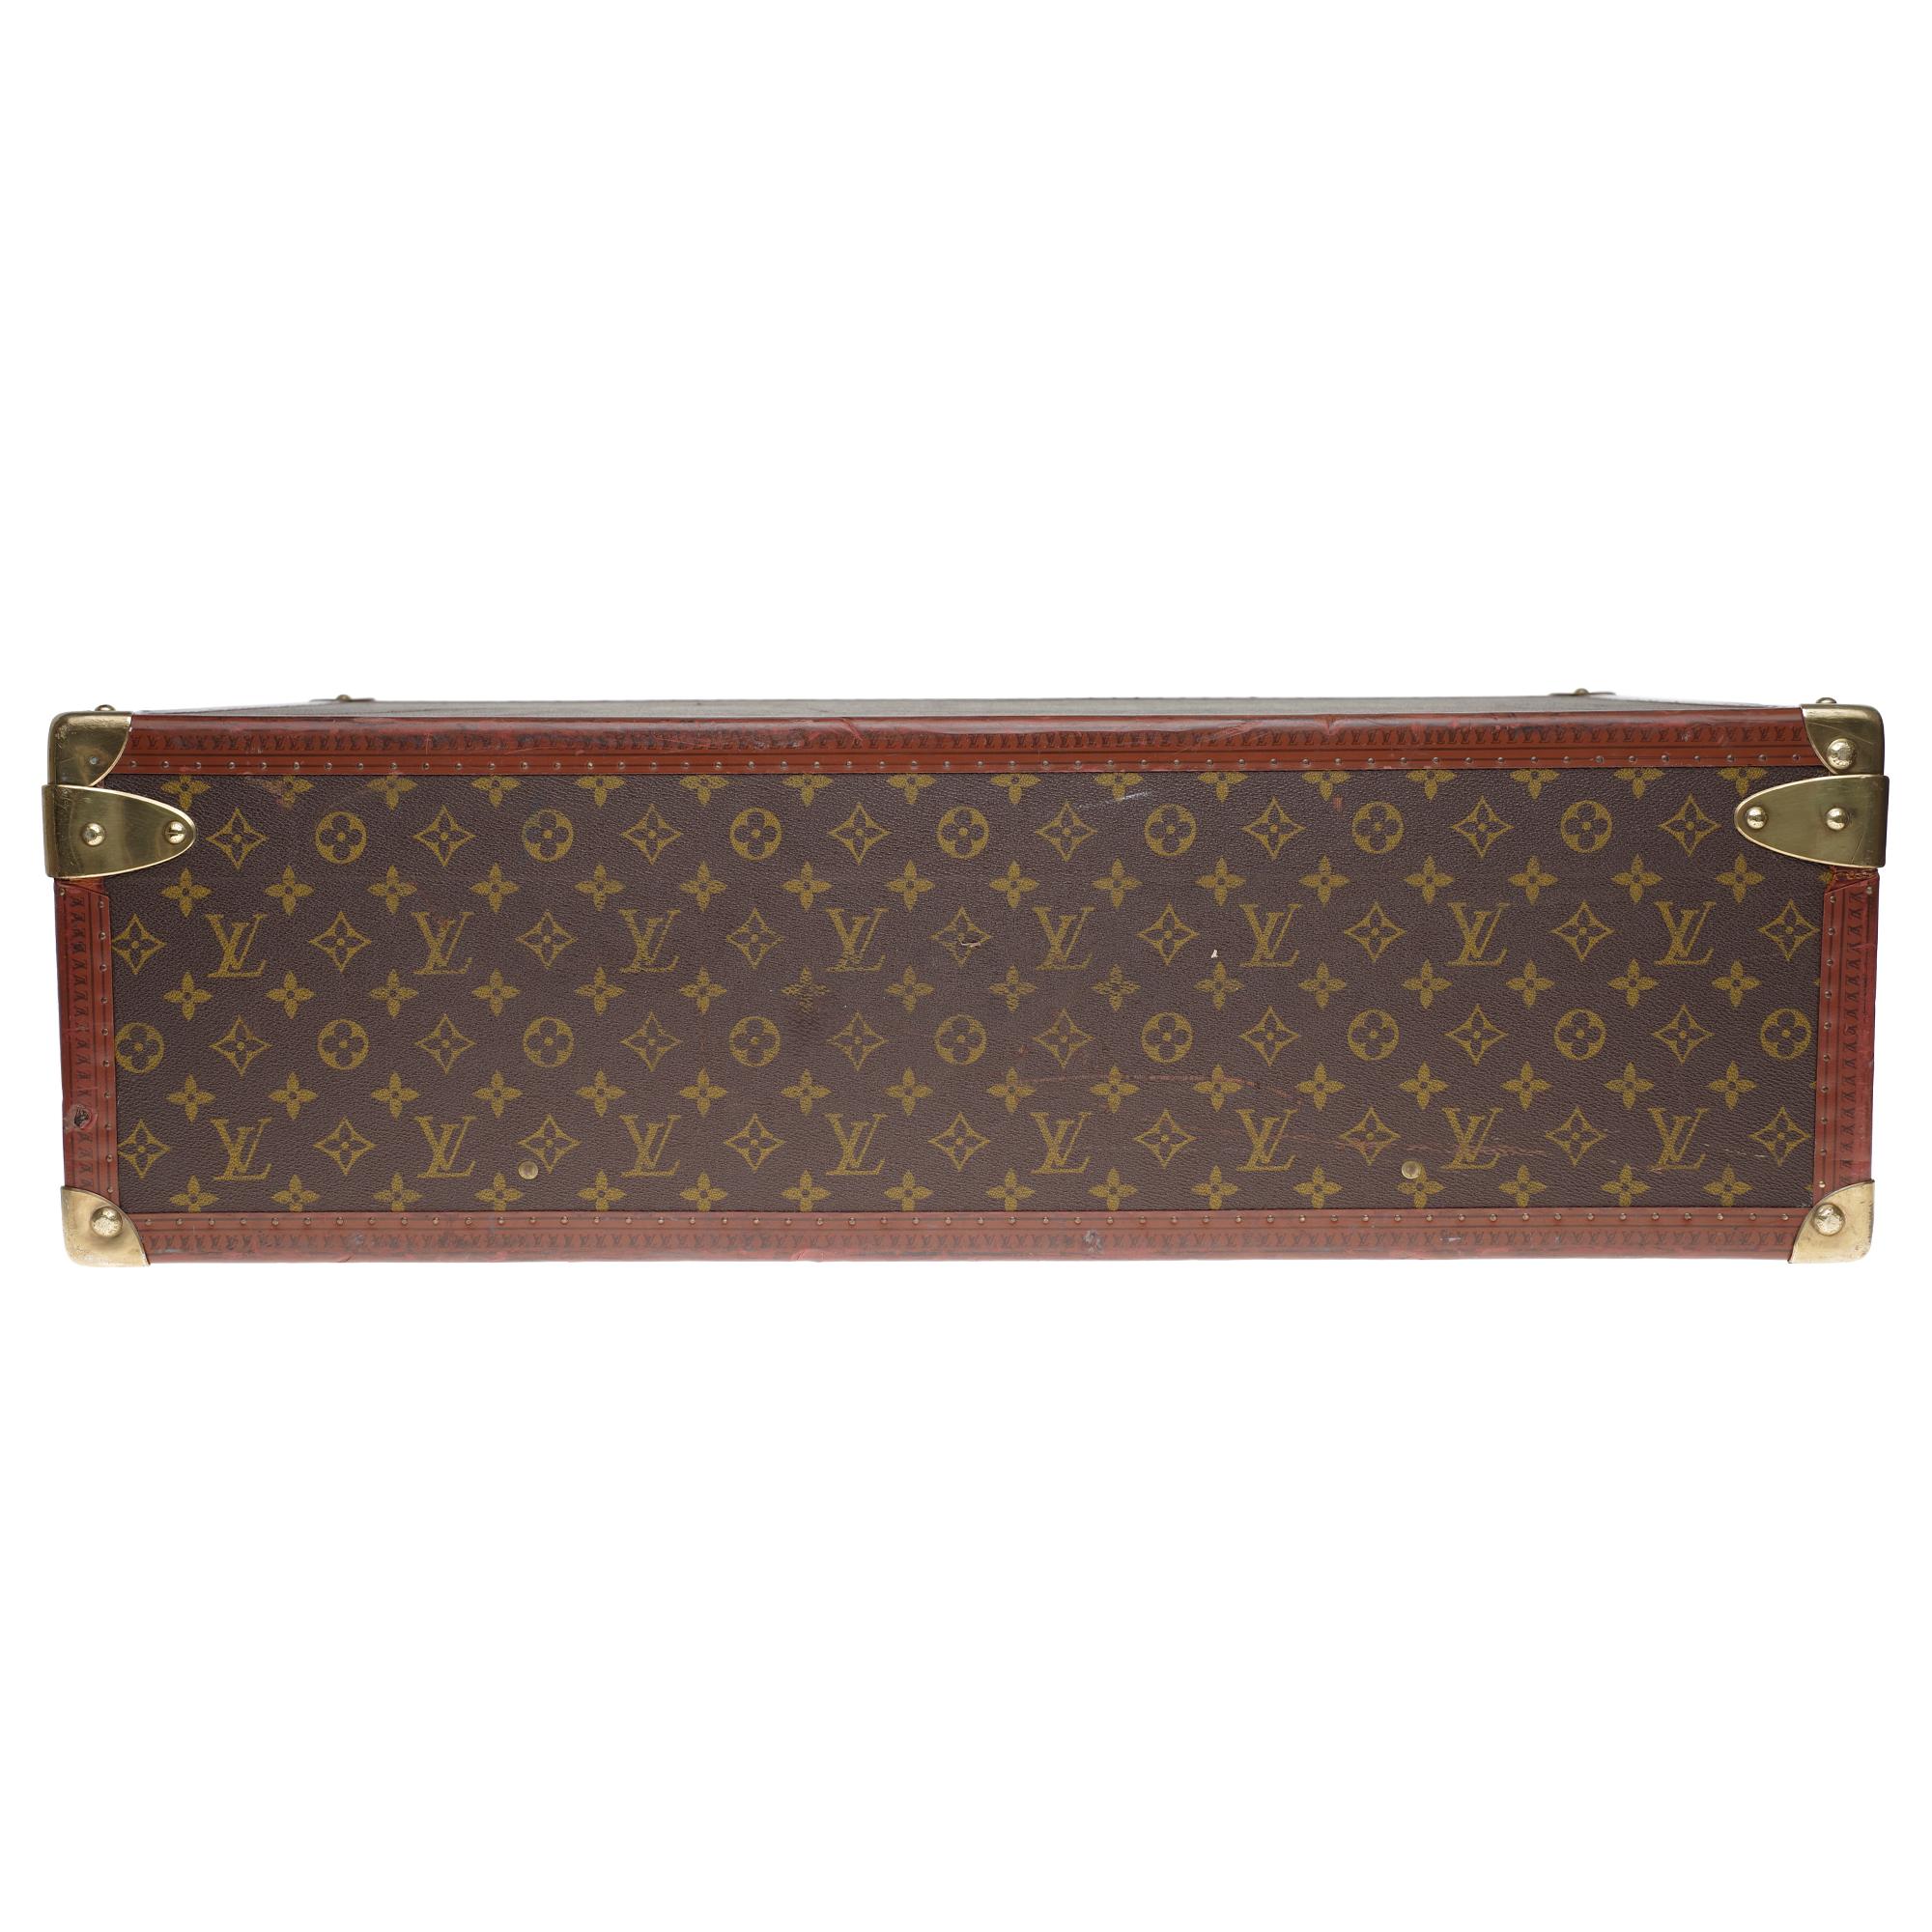 Women's or Men's Rare Louis Vuitton 70 Suitcase in brown monogram canvas